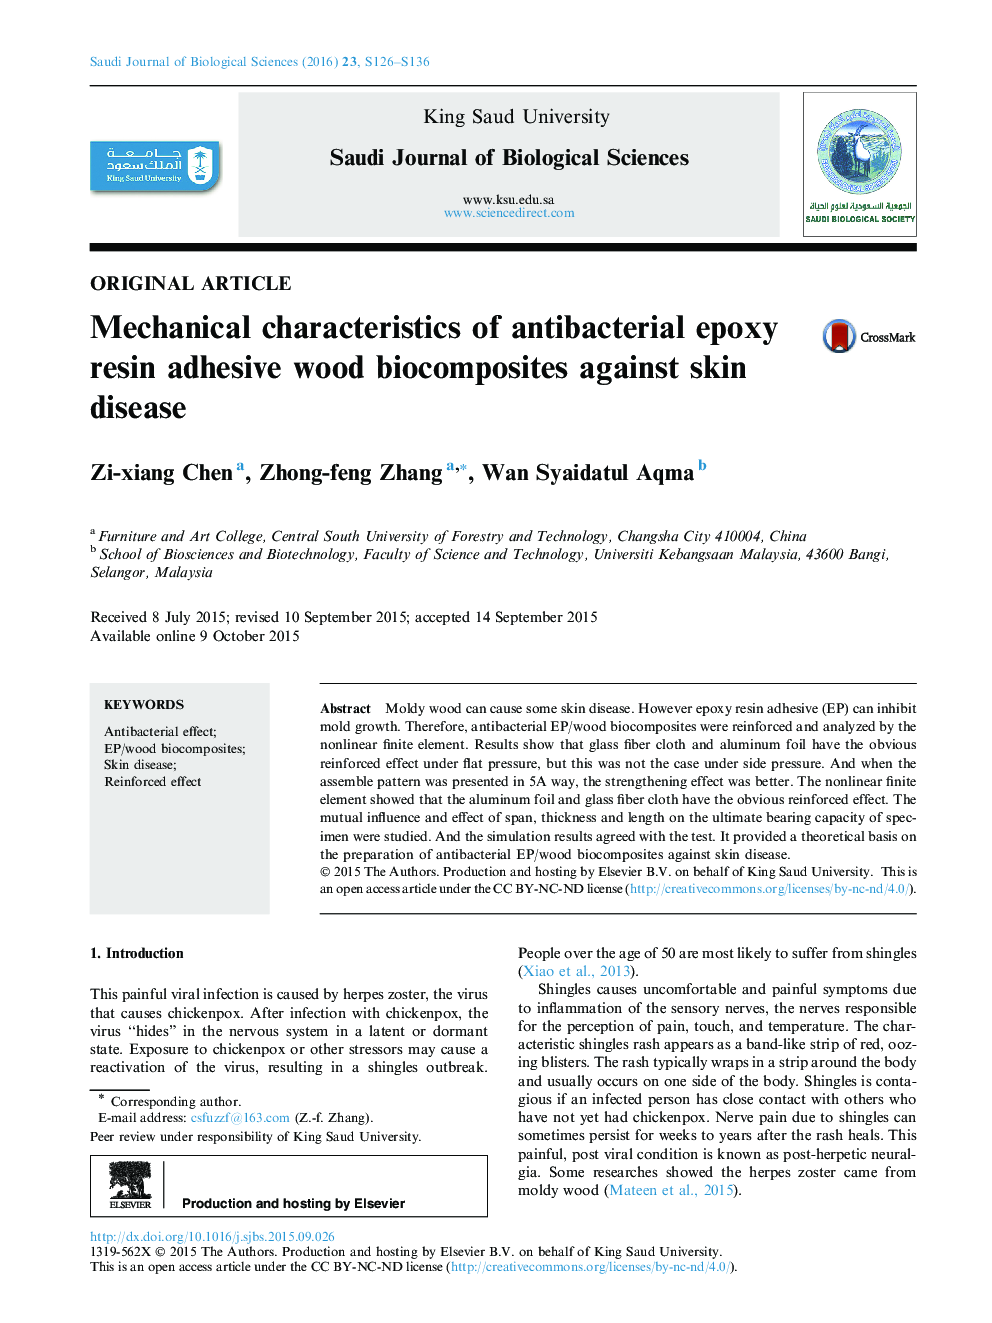 Mechanical characteristics of antibacterial epoxy resin adhesive wood biocomposites against skin disease